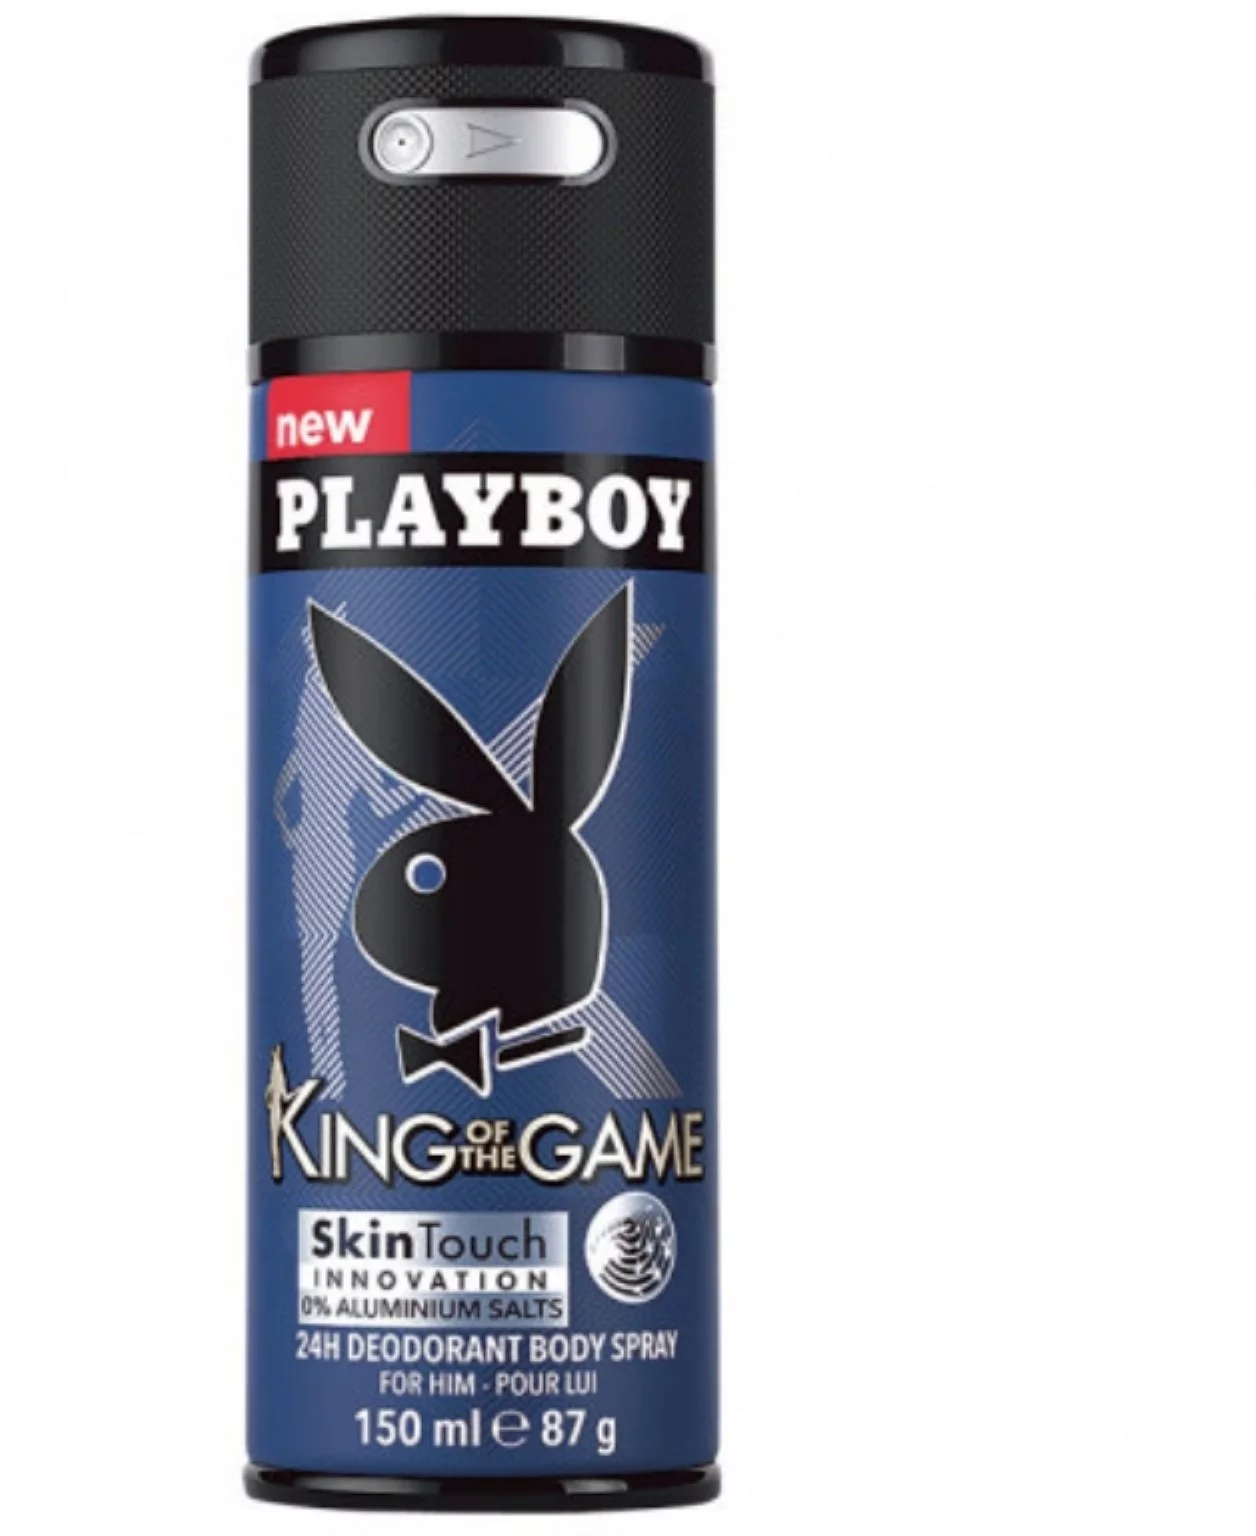 Playboy King Of The Game Coty Deodorant & Body Spray 5.0 oz